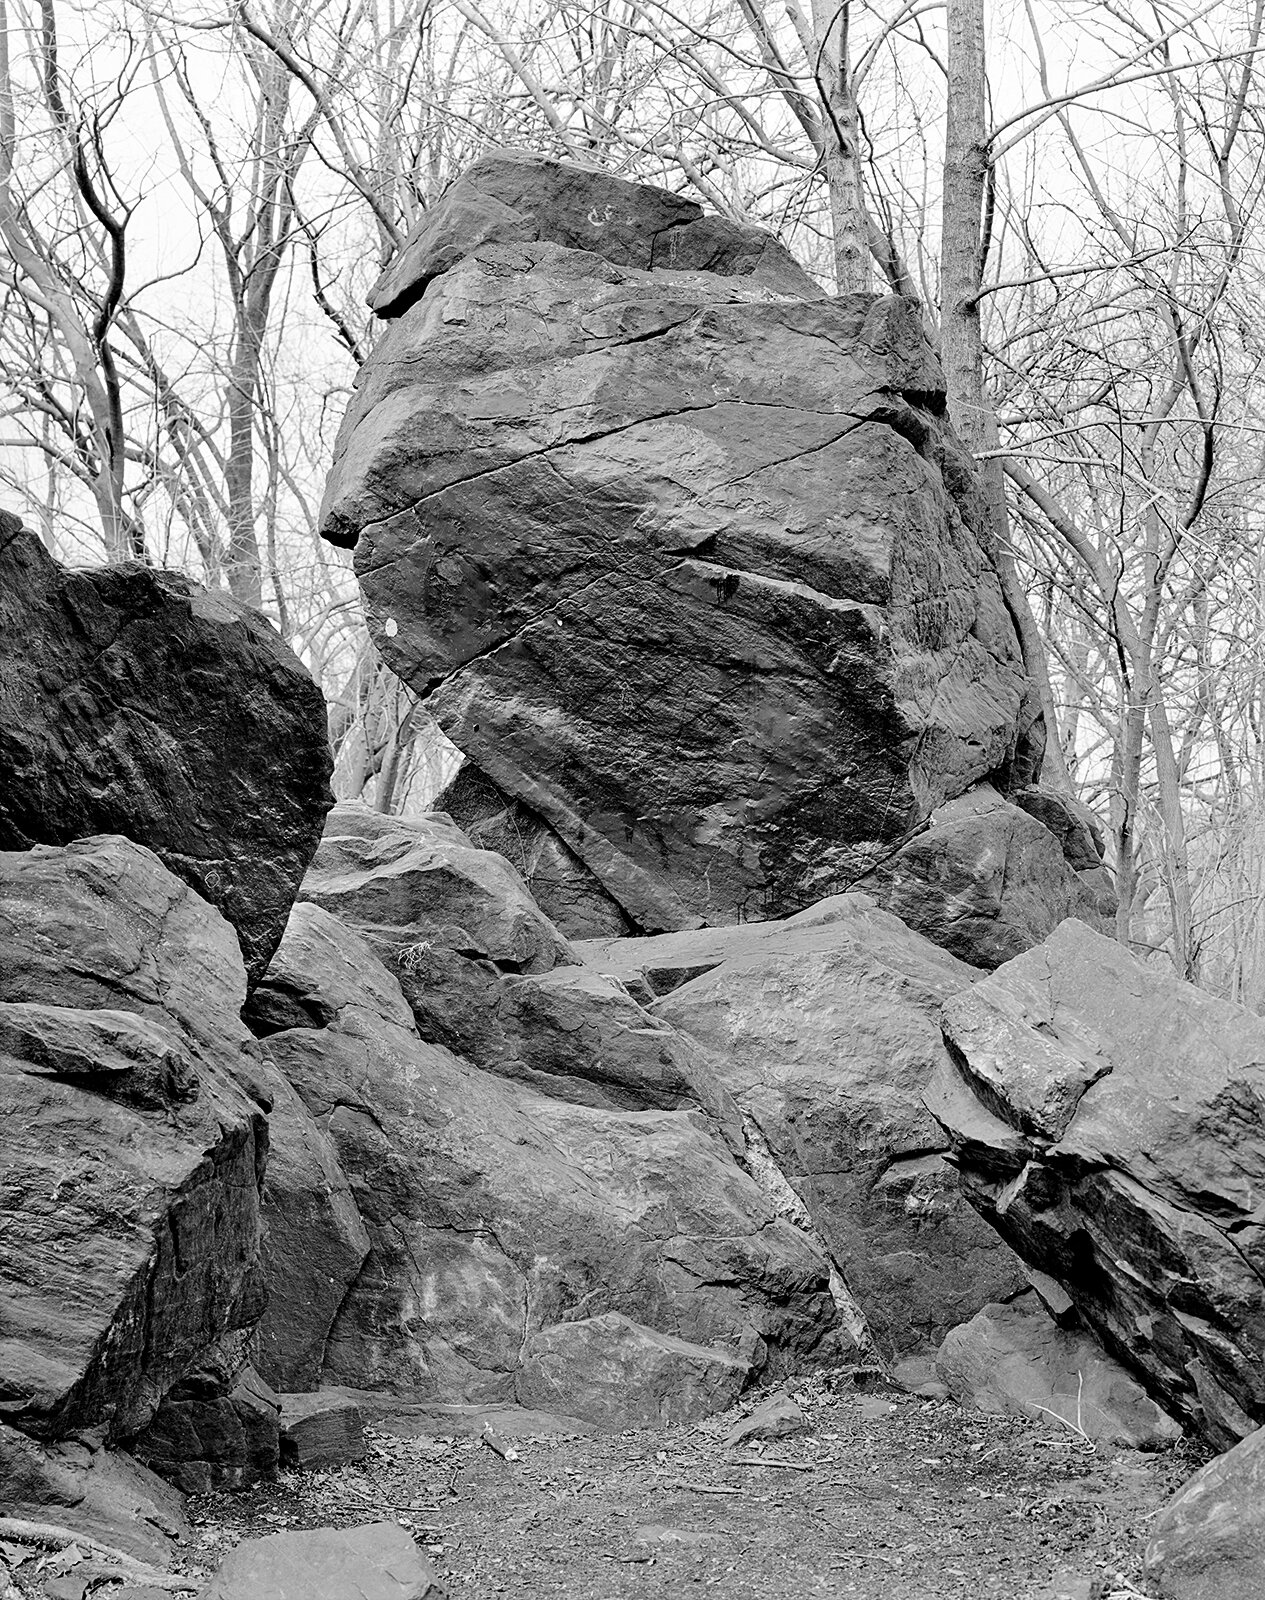  Indian Prayer Rock, Pelham Bay Park, Bronx 2014 